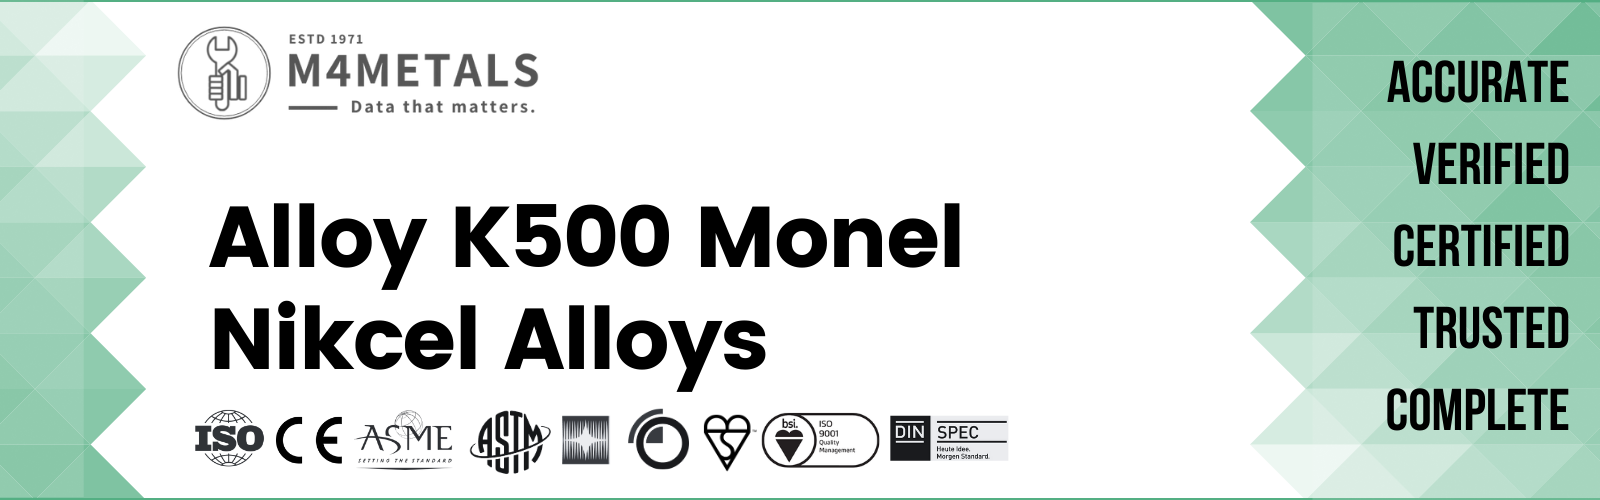 Monel Alloy K500